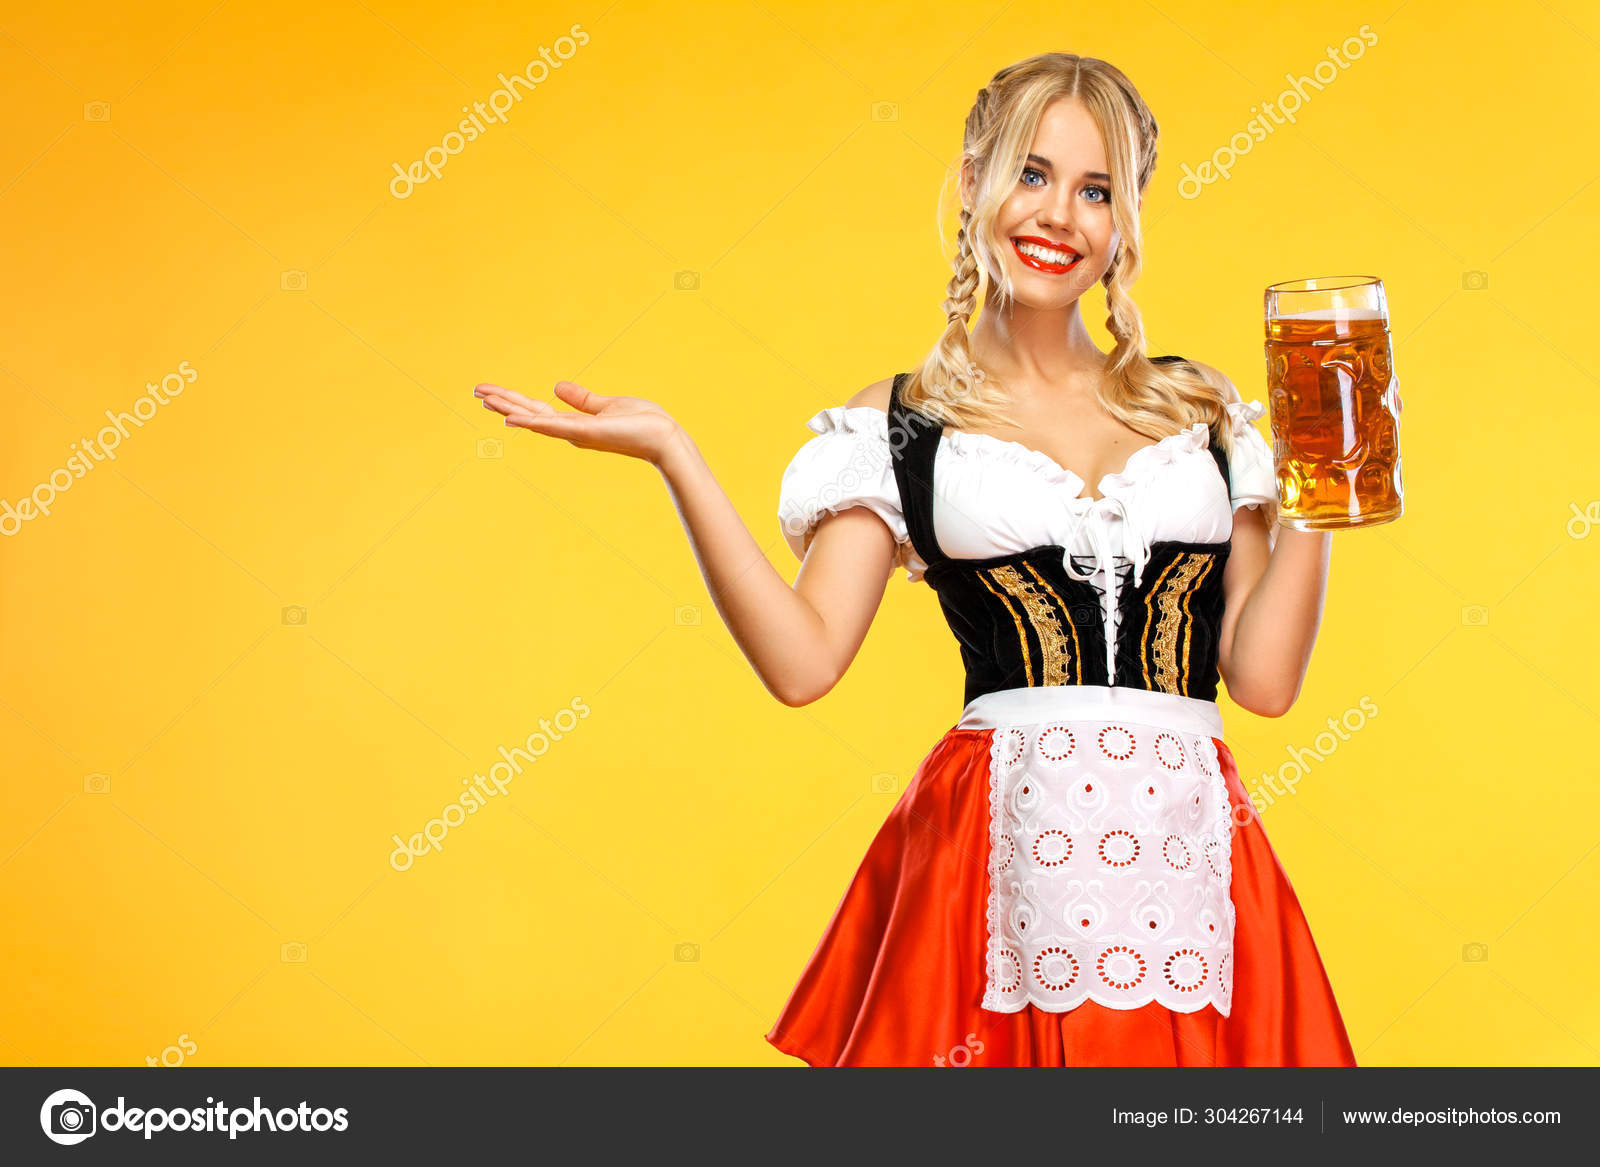 oktoberfest girl carrying beer